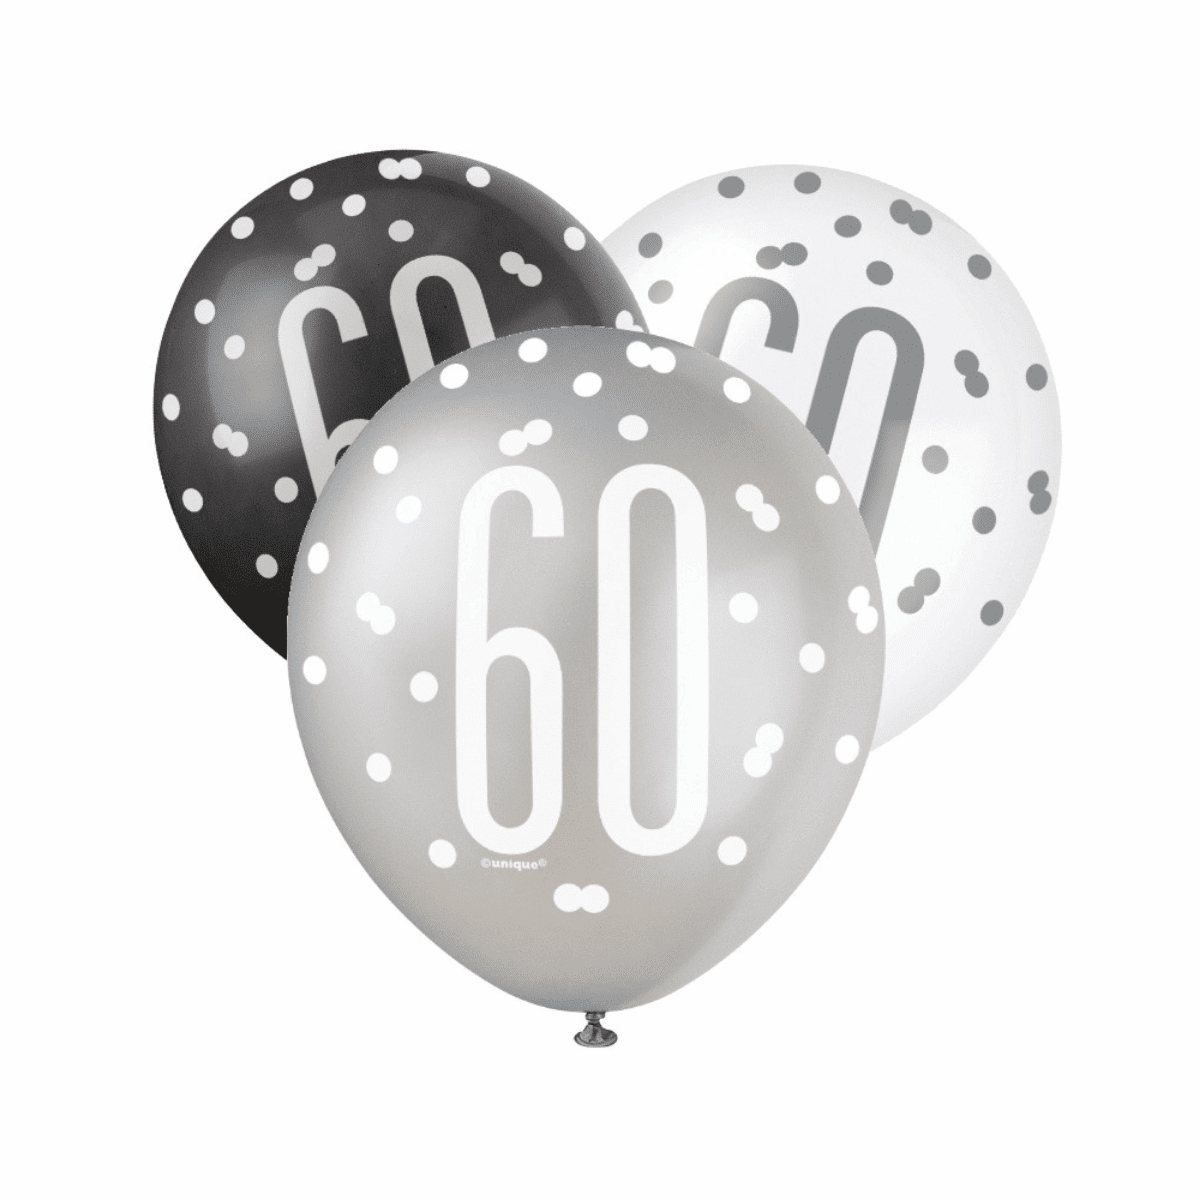 Black, Silver, & White Latex Balloons 60th